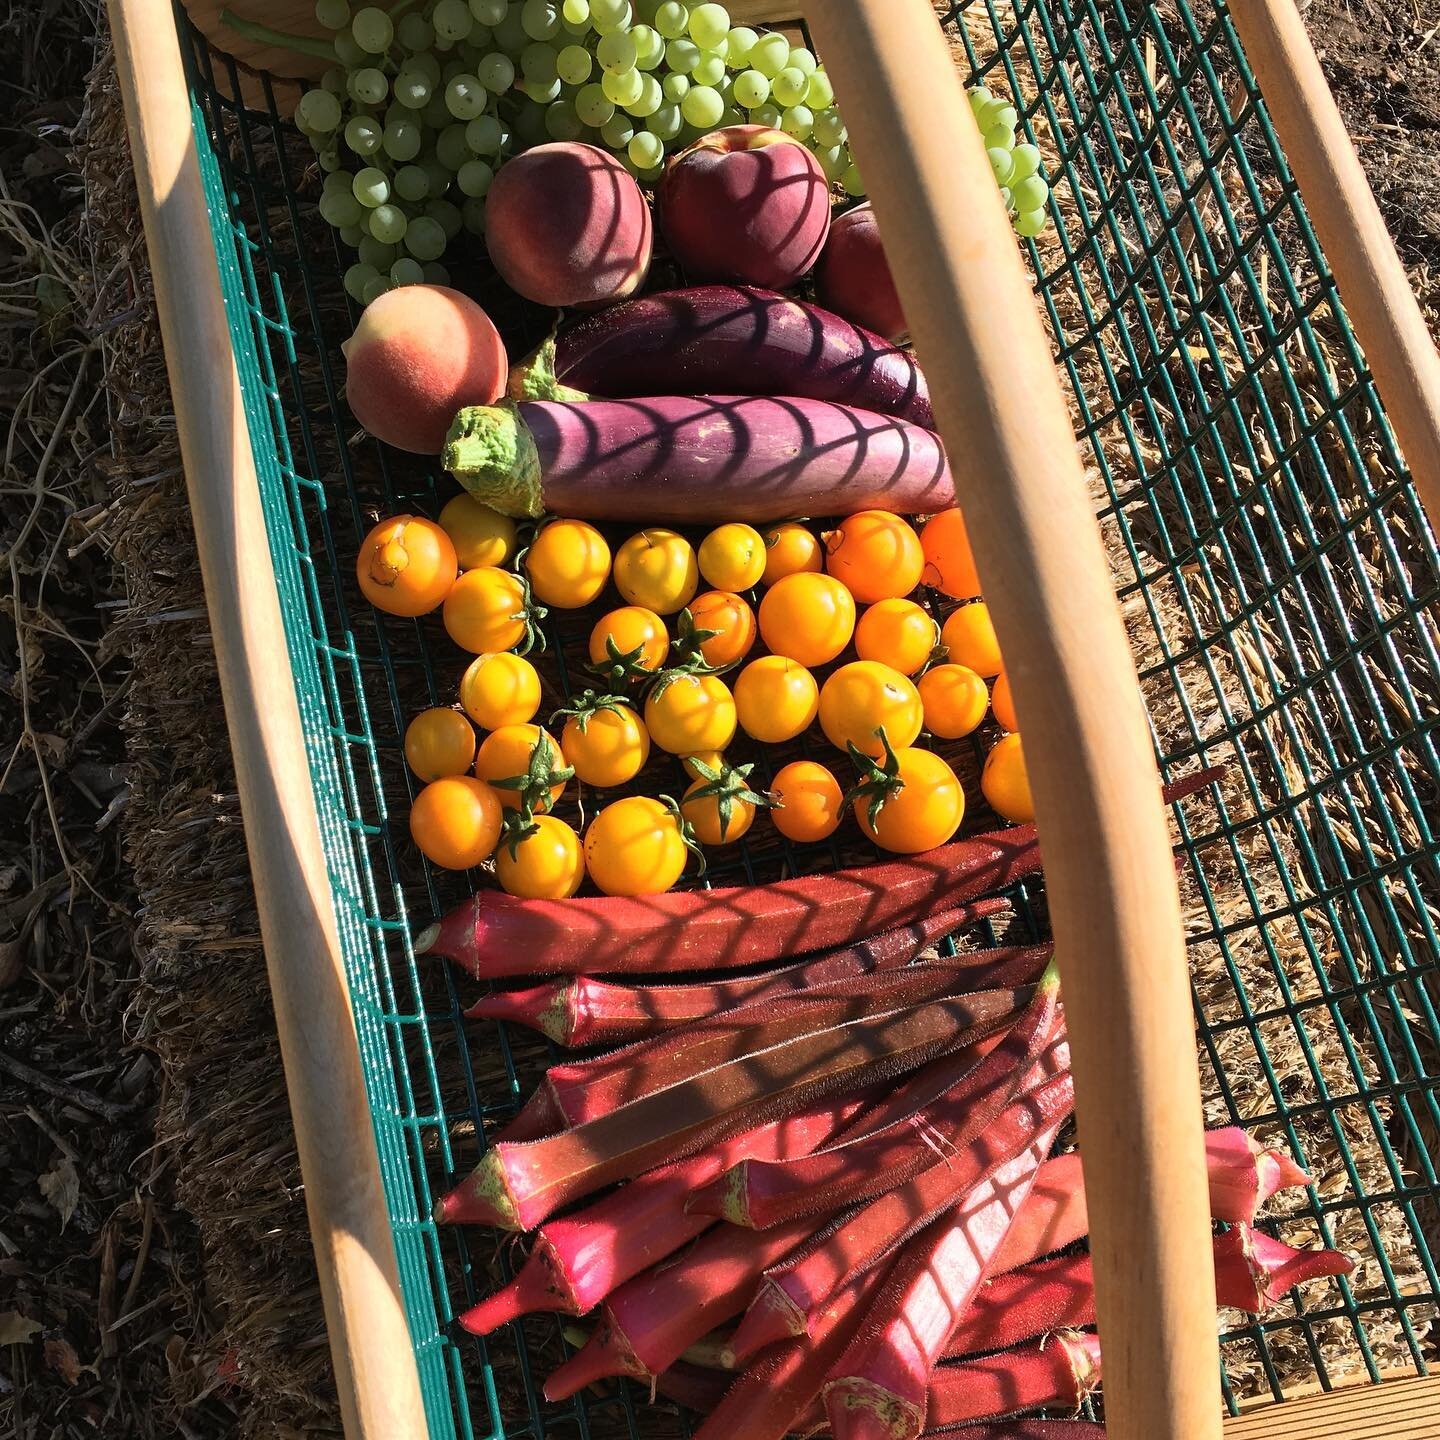 Colorful morning harvest 🌈
.
.
#morningsinthegarden #harvesttime #gardengrocerystore #growyourownfood #letfoodbethymedicine #eattherainbow